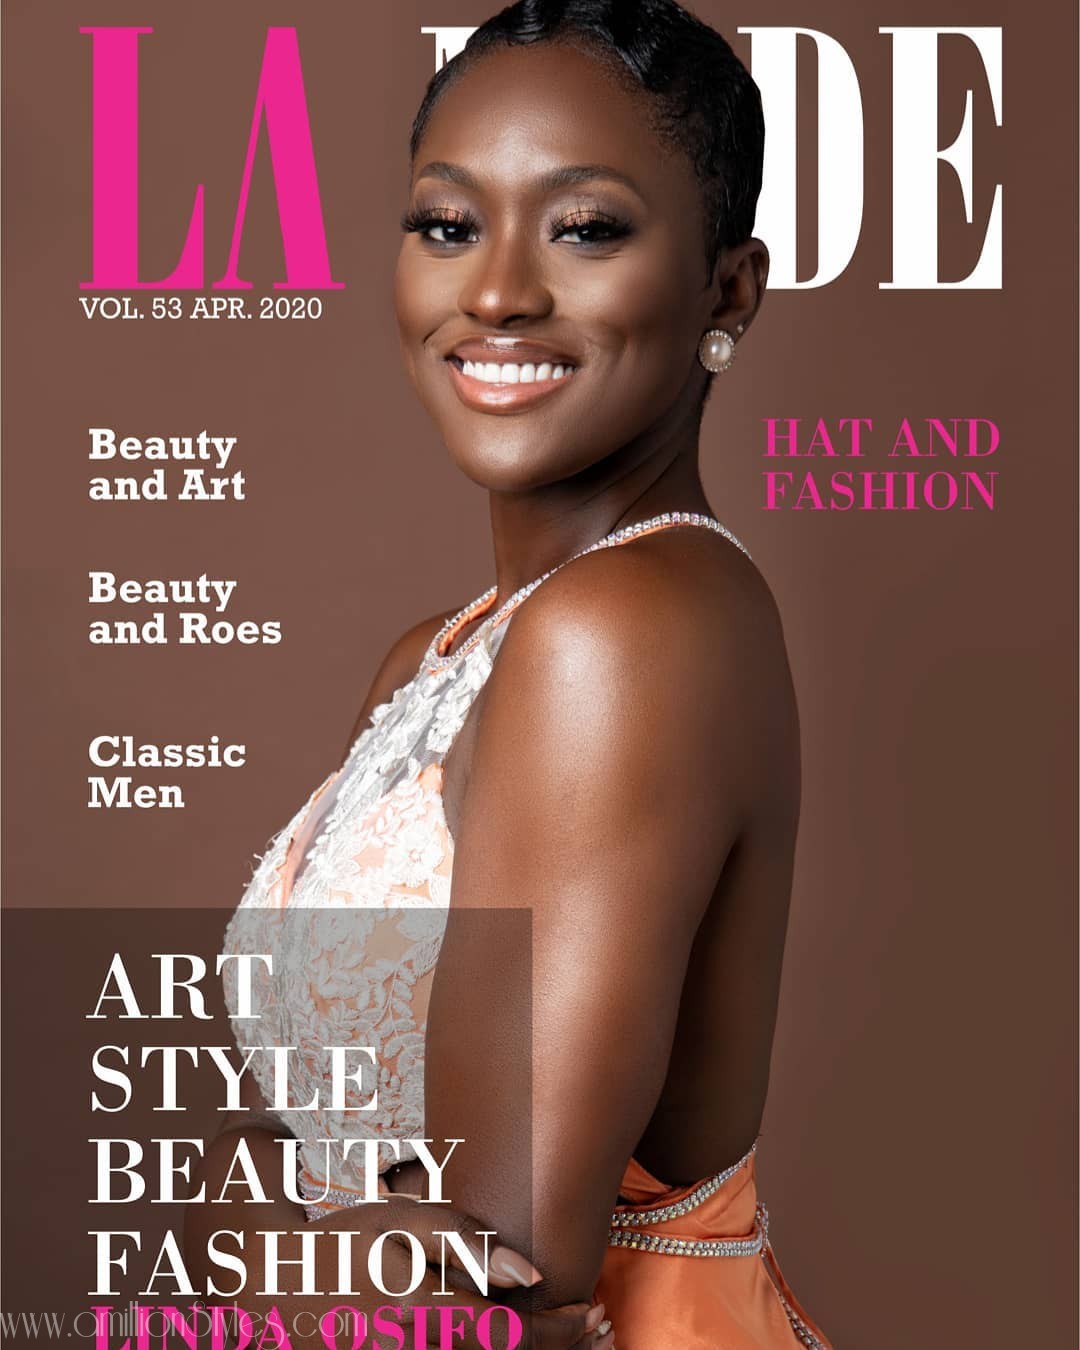 La Mode Magazine Features Linda Osifo As April 2020 Cover Girl